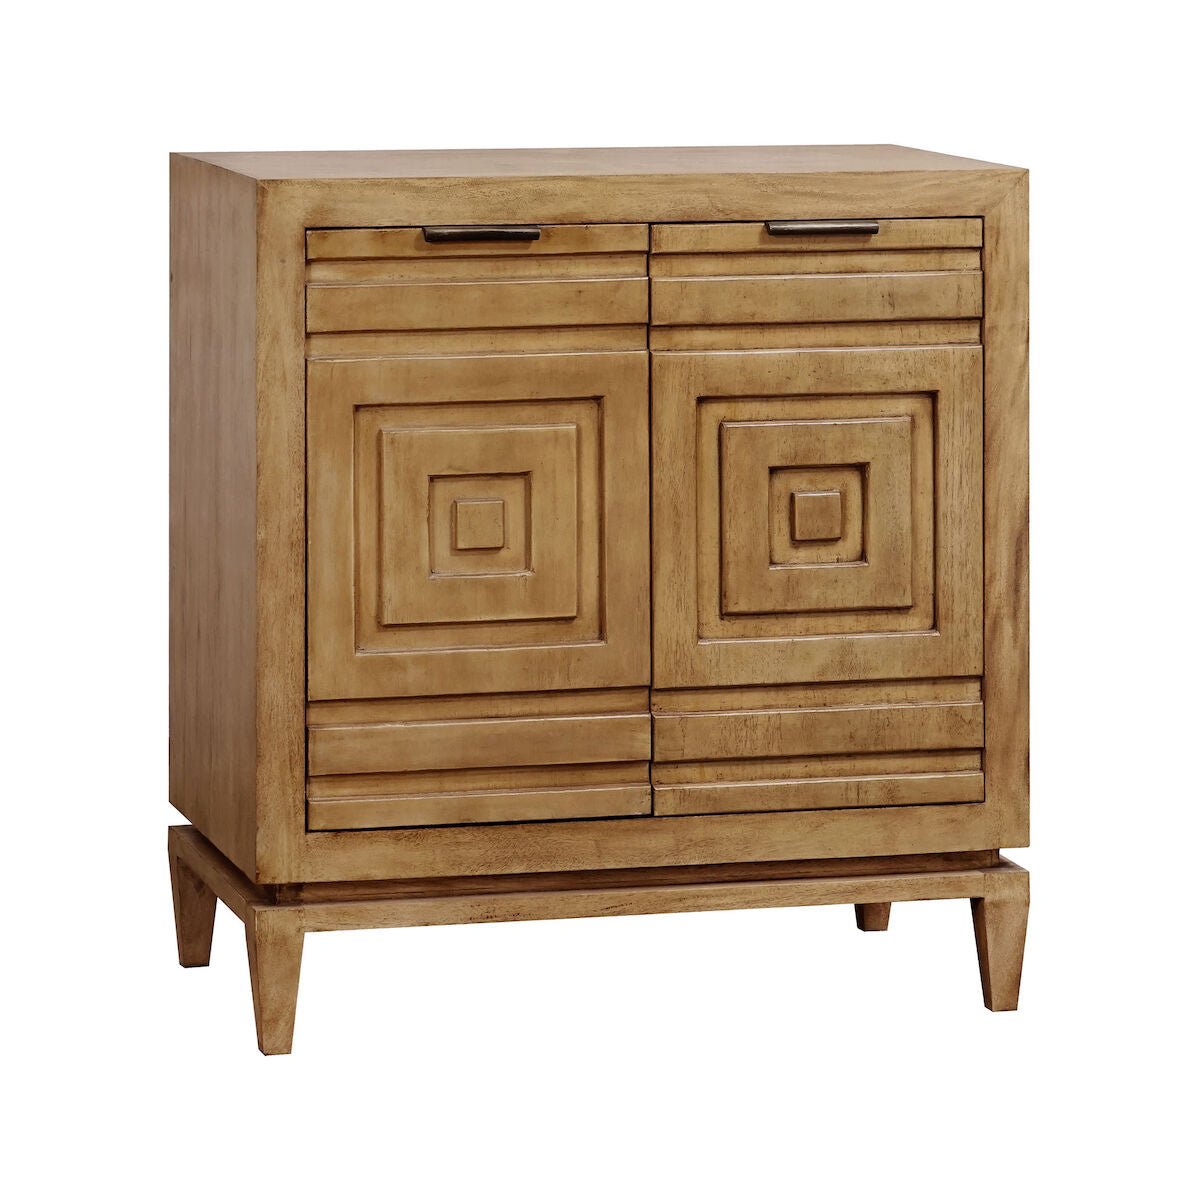 Nicasio Natural Wood Storage Cabinet